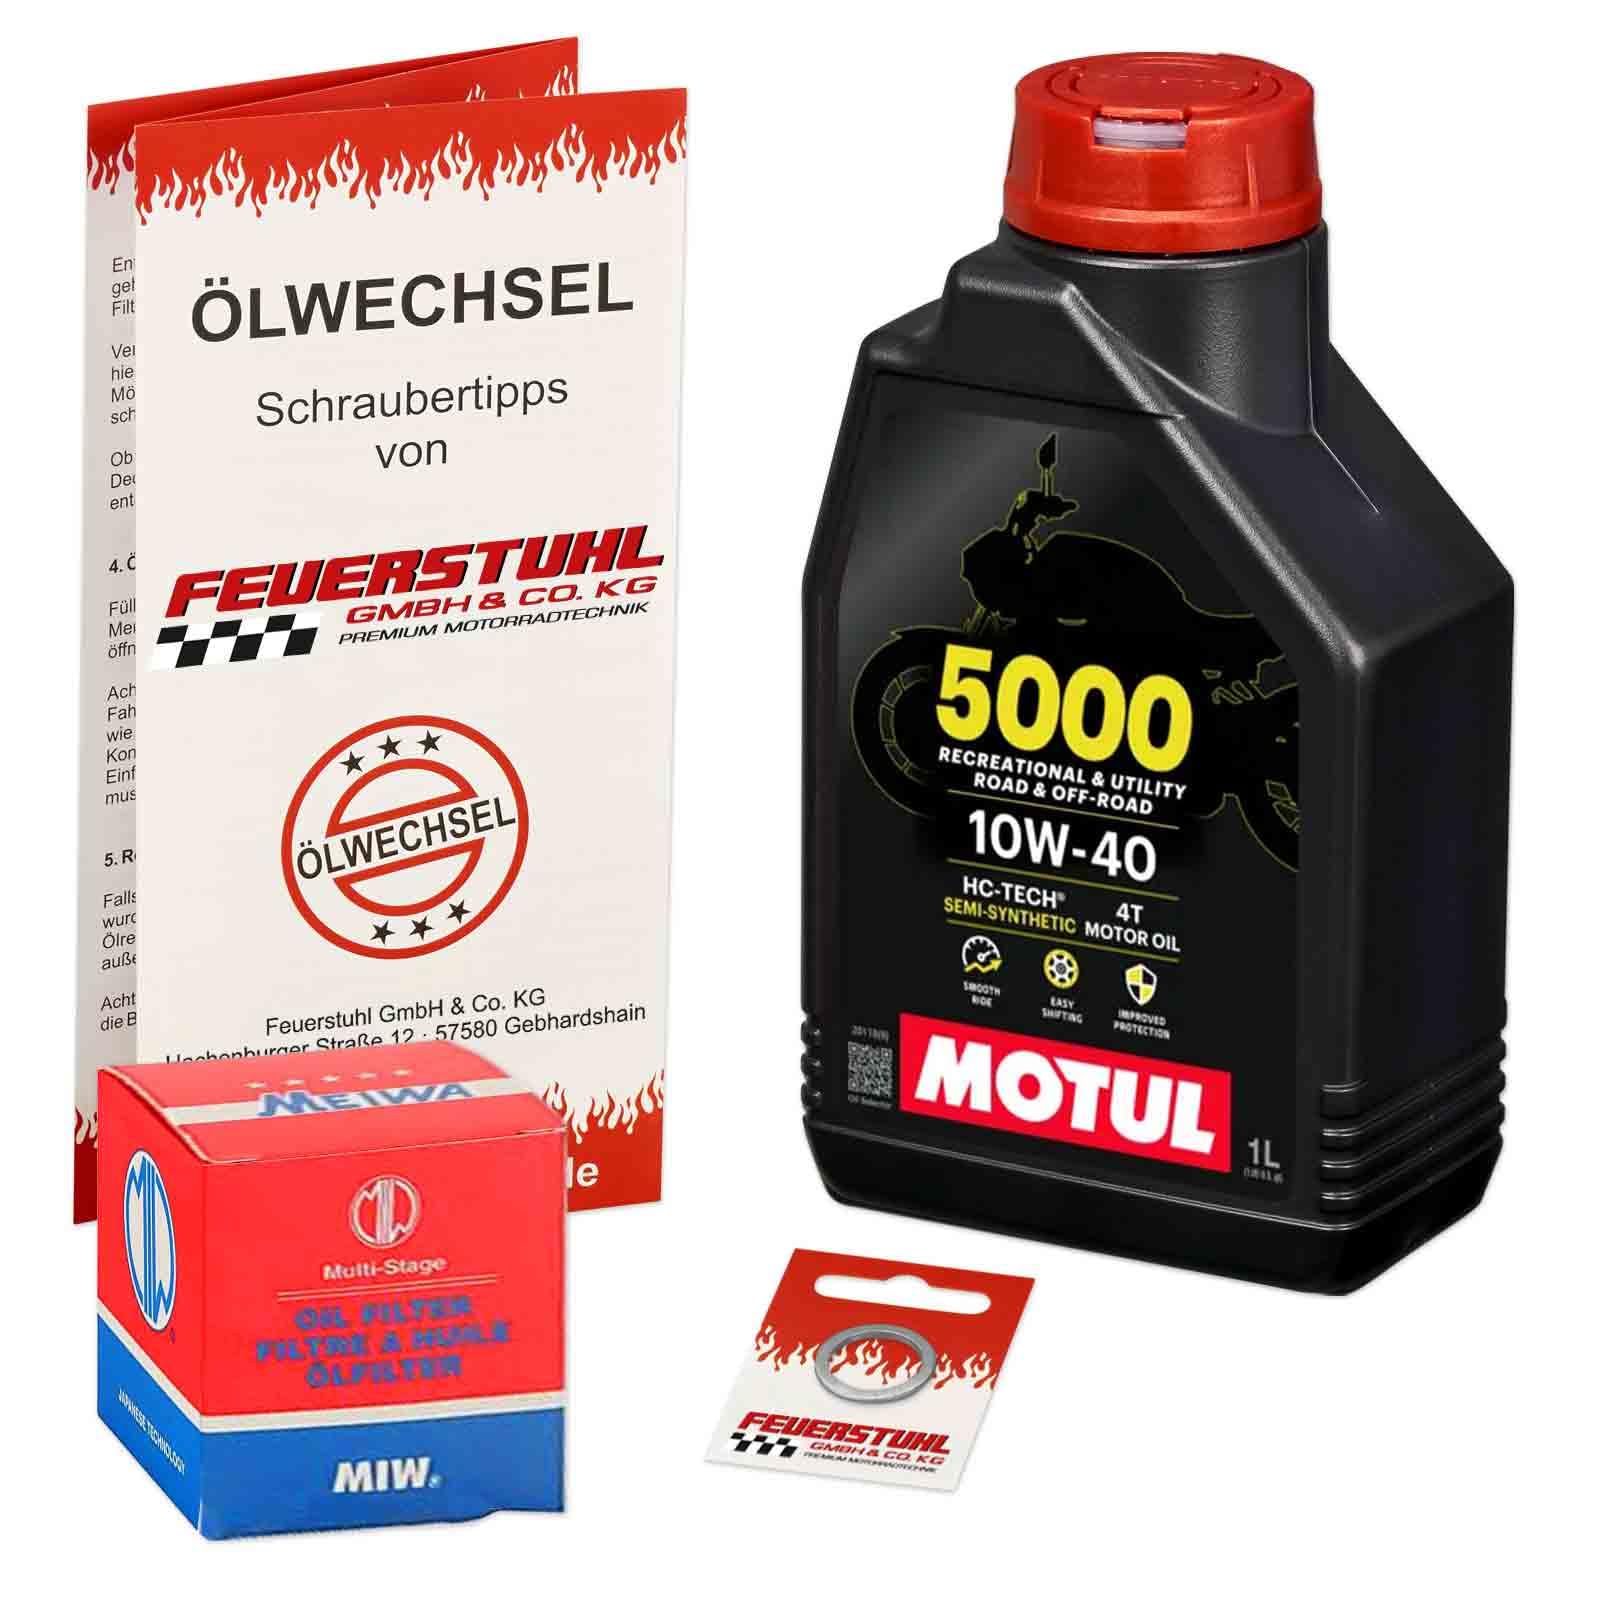 Öl & Ölfilter für Honda CRF 250 R, 2004-2017 / Ölwechsel Set/Motul 10W-40 Motoröl + MiW Filter + Dichtring(e) von Feuerstuhl GmbH & Co. KG